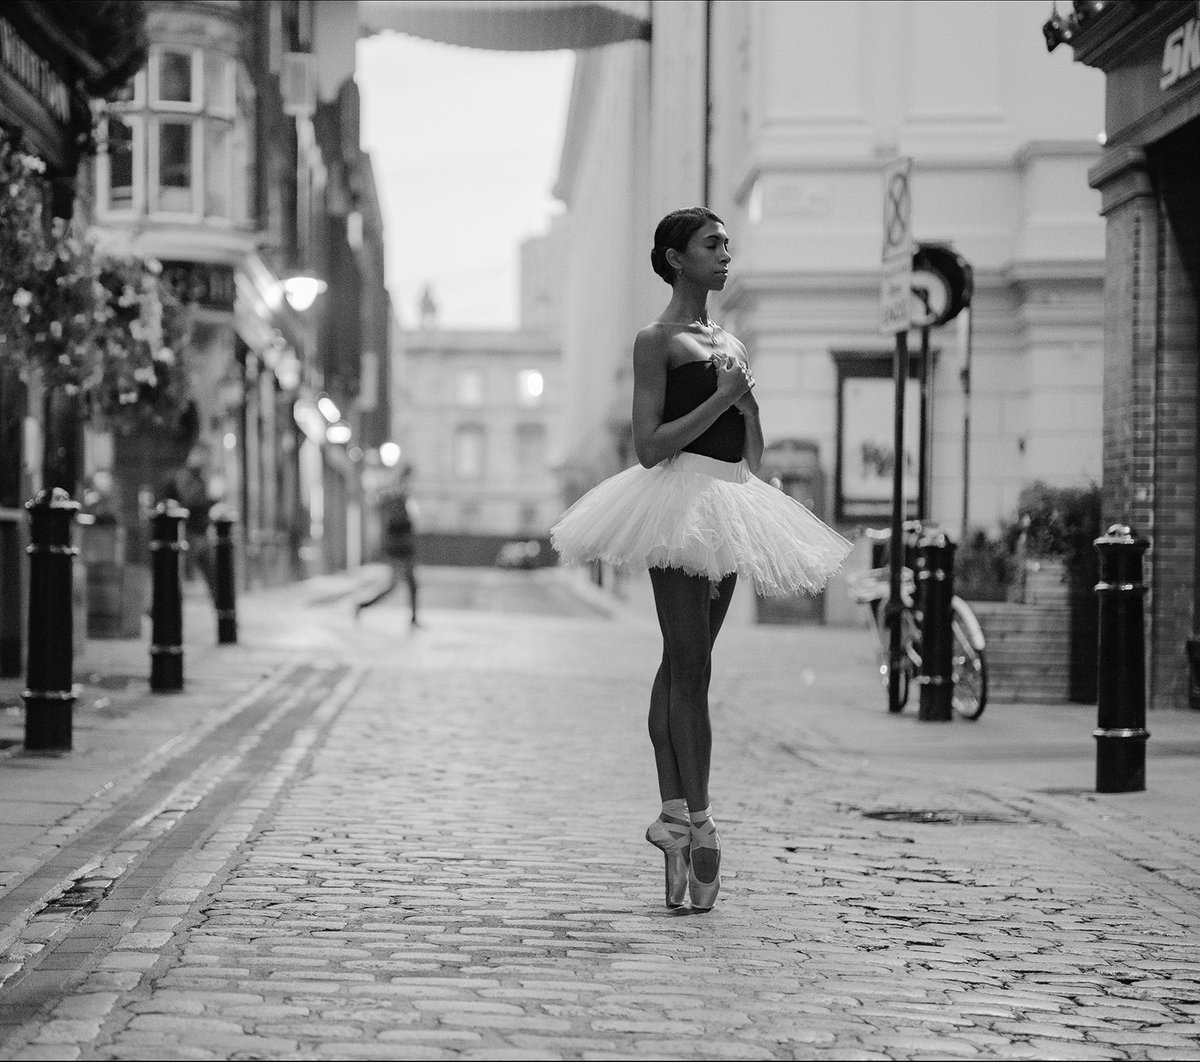 Yasmine Naghdi in Covent Garden. 

#YasmineNaghdi #BallerinaProject #CoventGarden #RoyalOperaHouse #ballerina #ballet 

Purchase a Ballerina Project limited edition print or Instax Collection: ballerinaproject.etsy.com